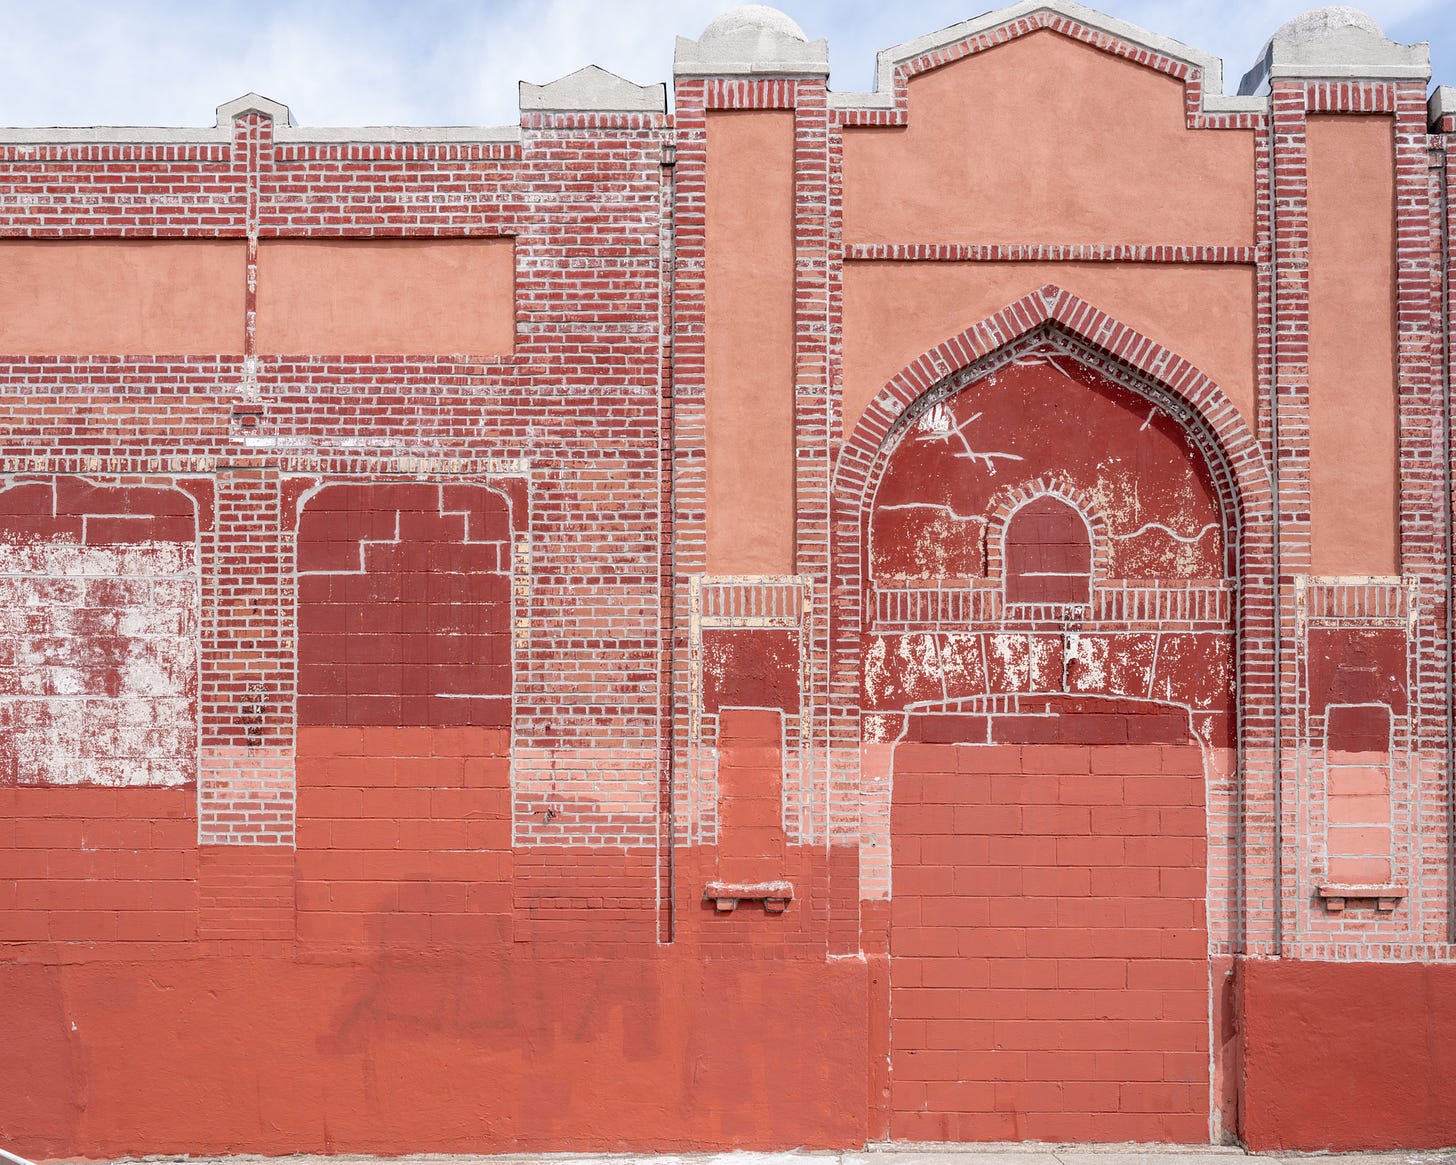 Red painted, moorish looking wall with bricks